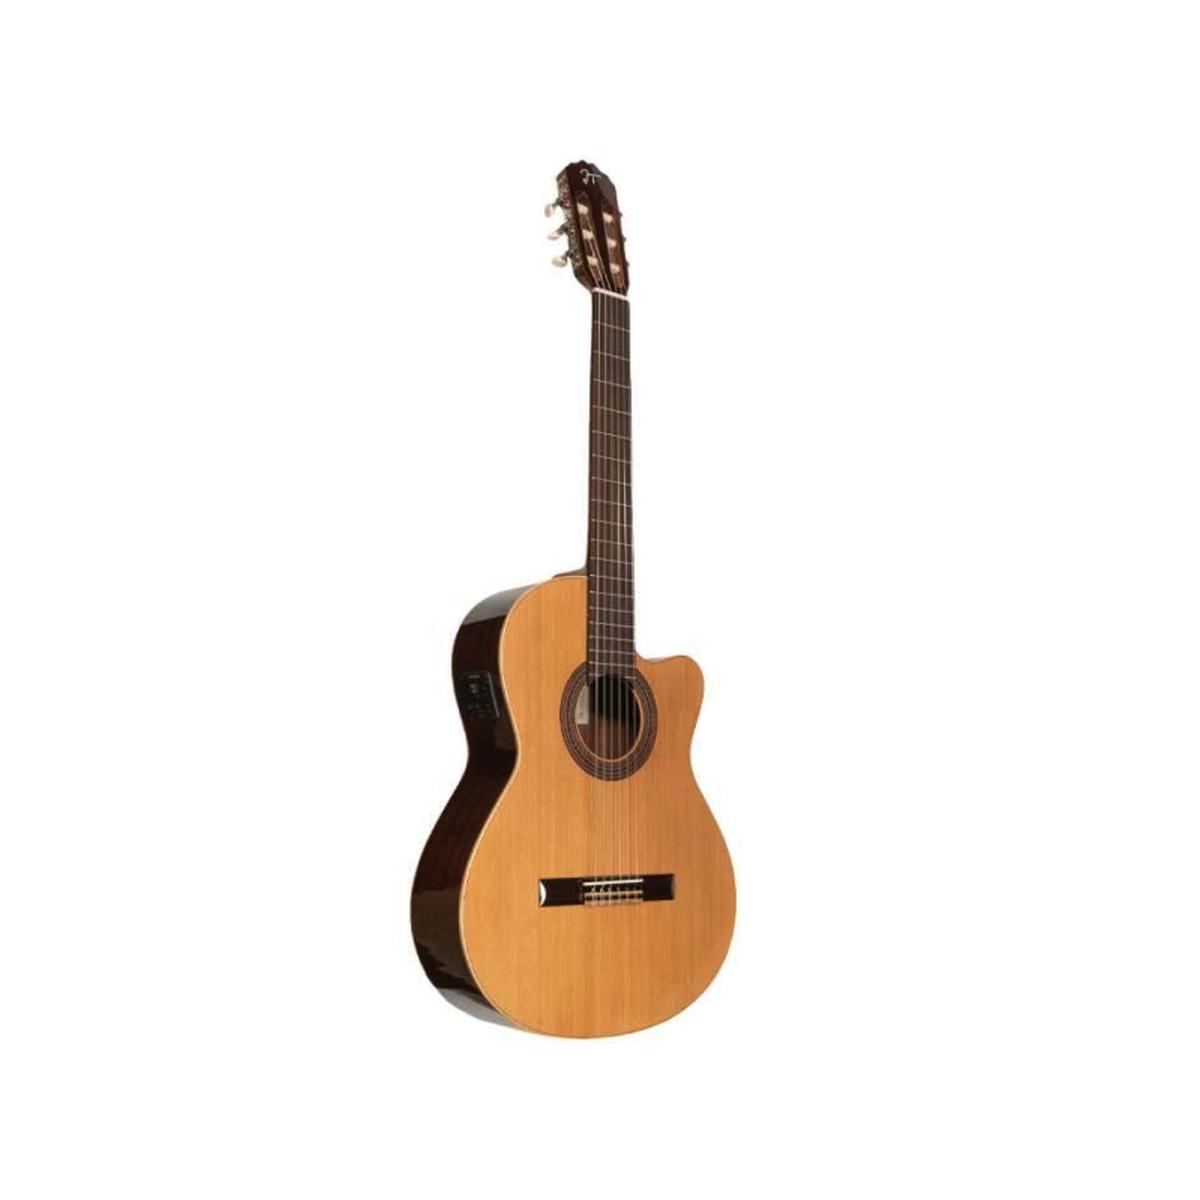 Jose torres jtc-10ce chitarra classica elettrificata